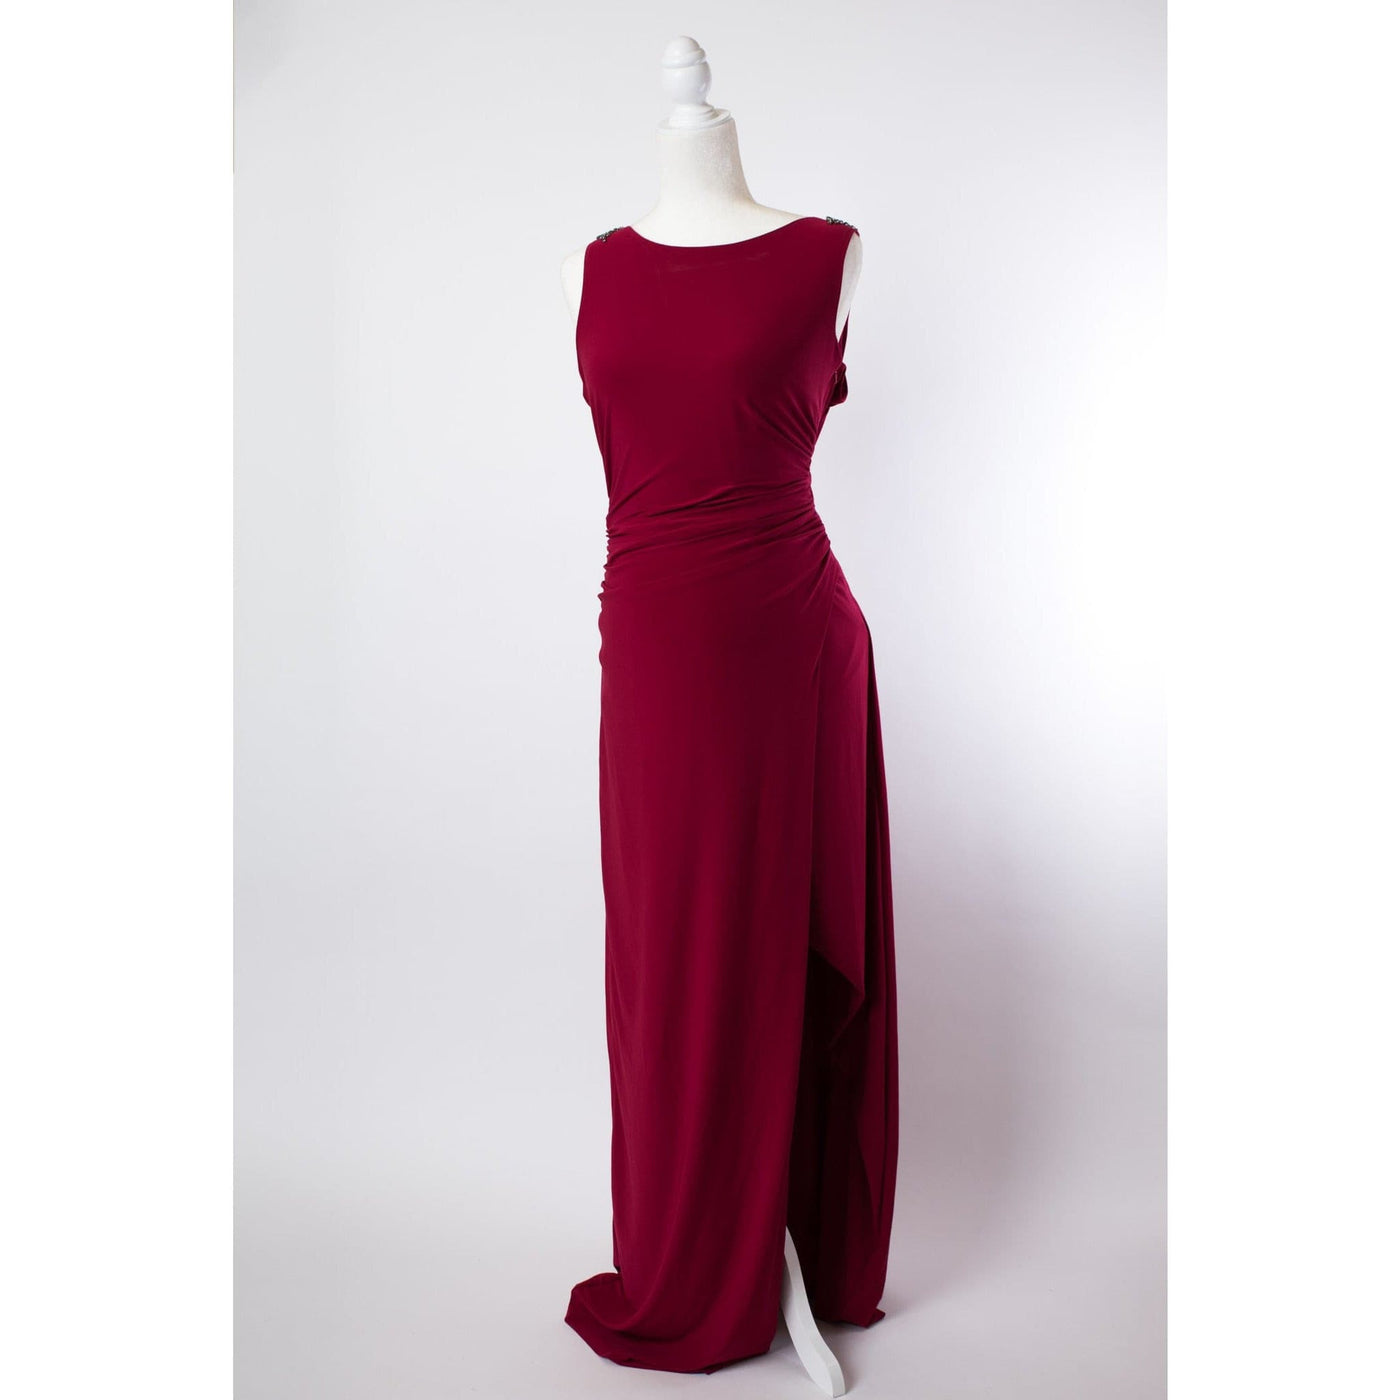 Gorgeous red formal dress - La Belle Bump